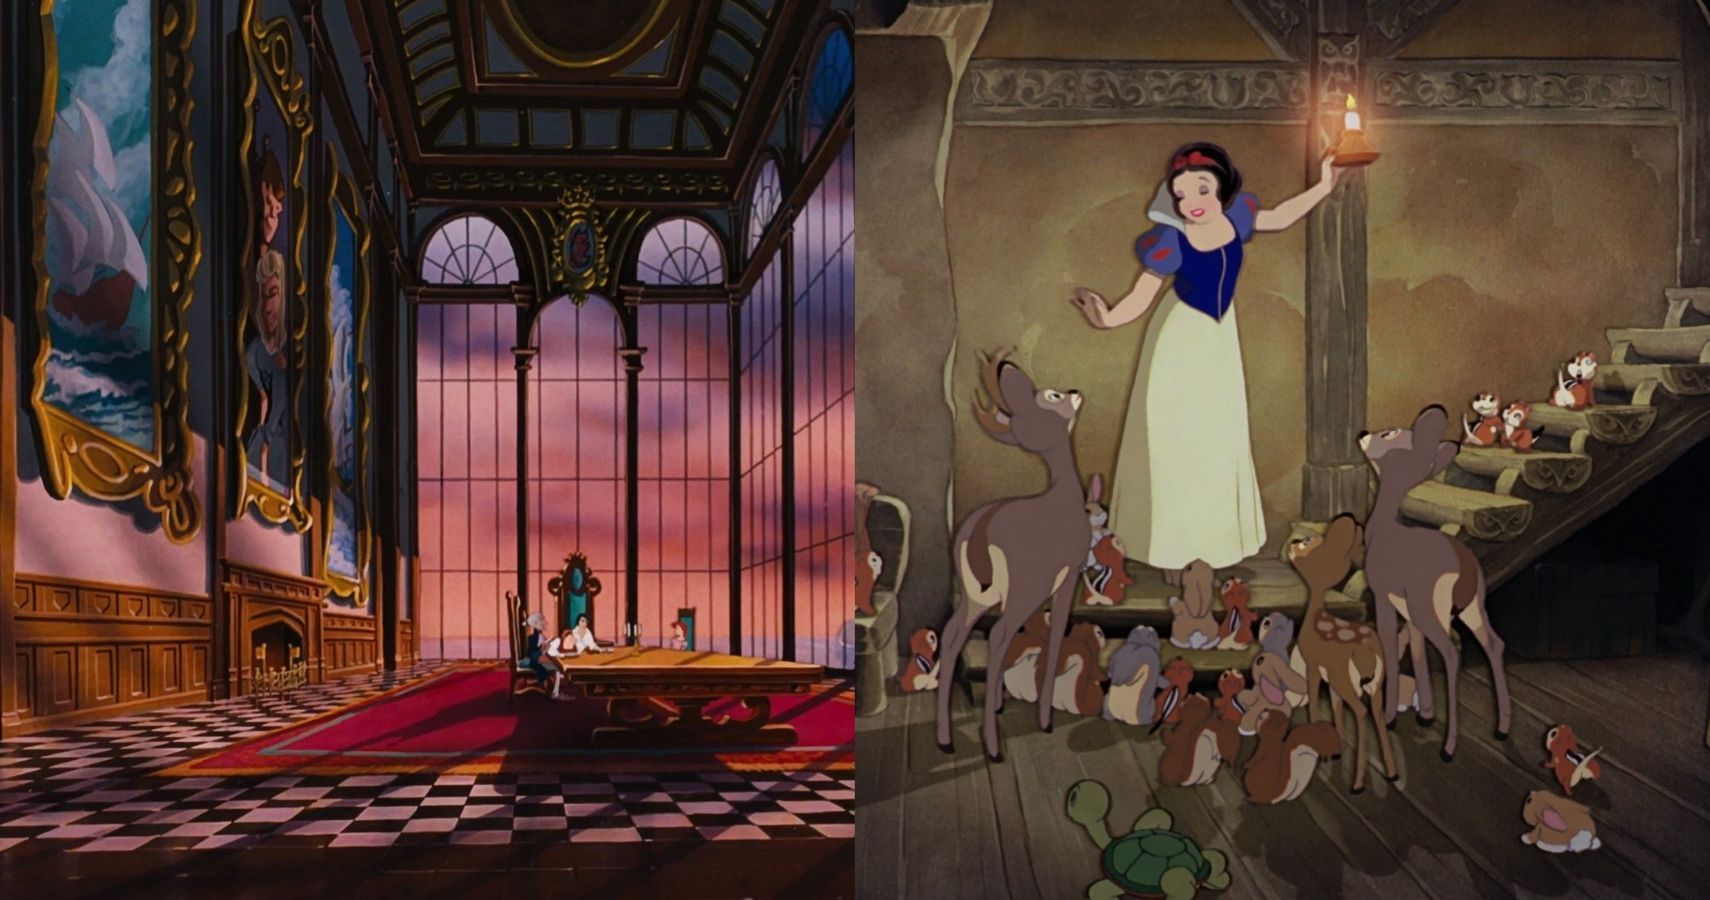 Details In Disney Princesses' Houses 